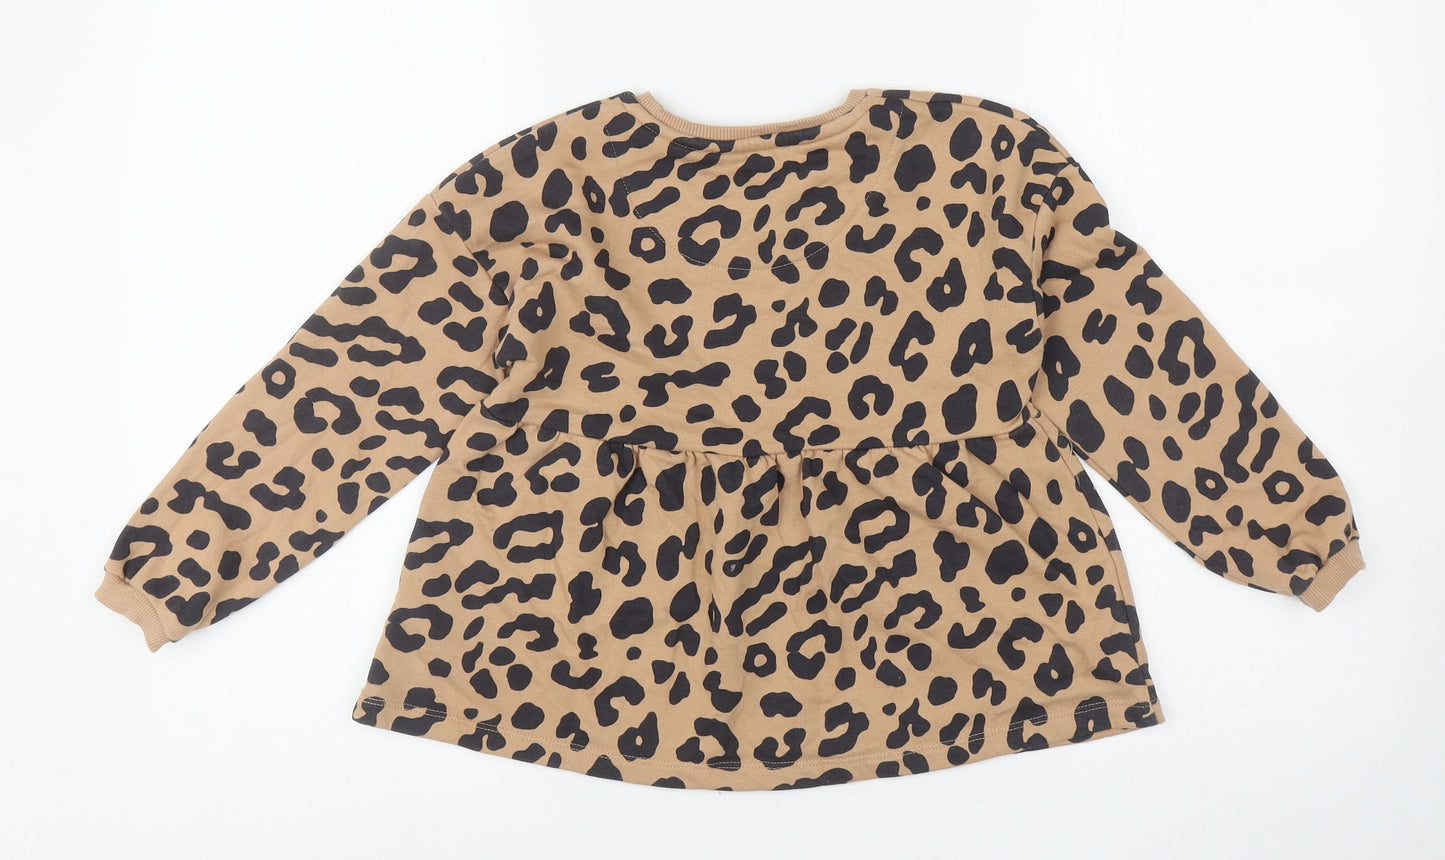 F&F Girls Brown Animal Print Cotton Pullover Sweatshirt Size 6-7 Years Pullover - Leopard Print